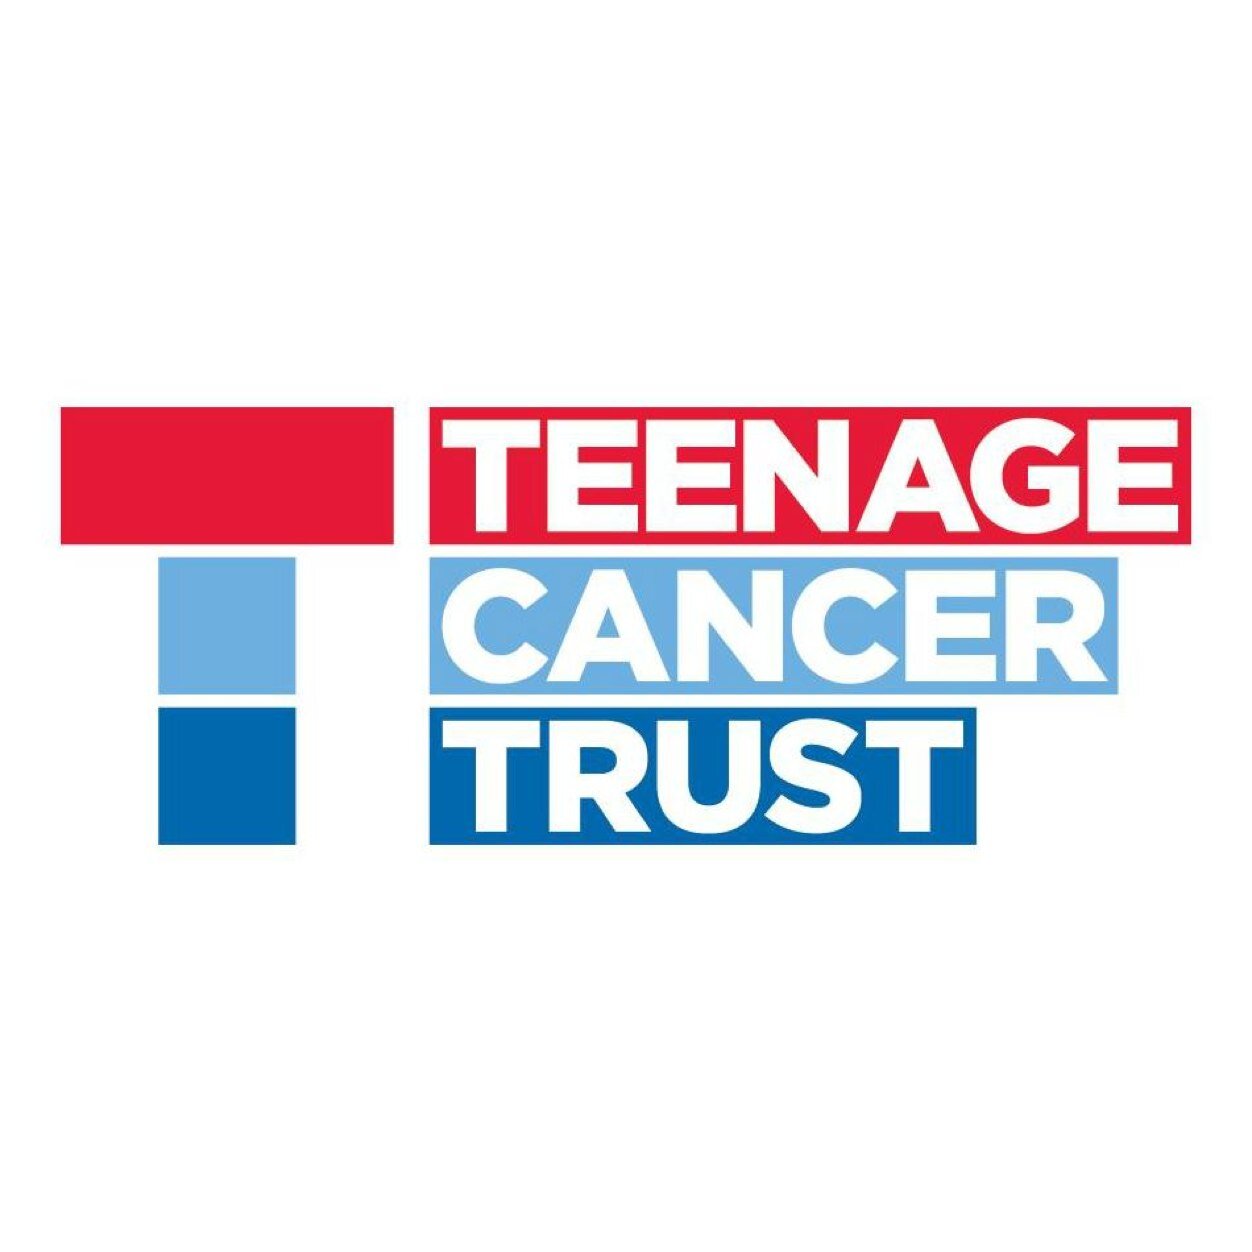 Teenage Cancer Trust Image